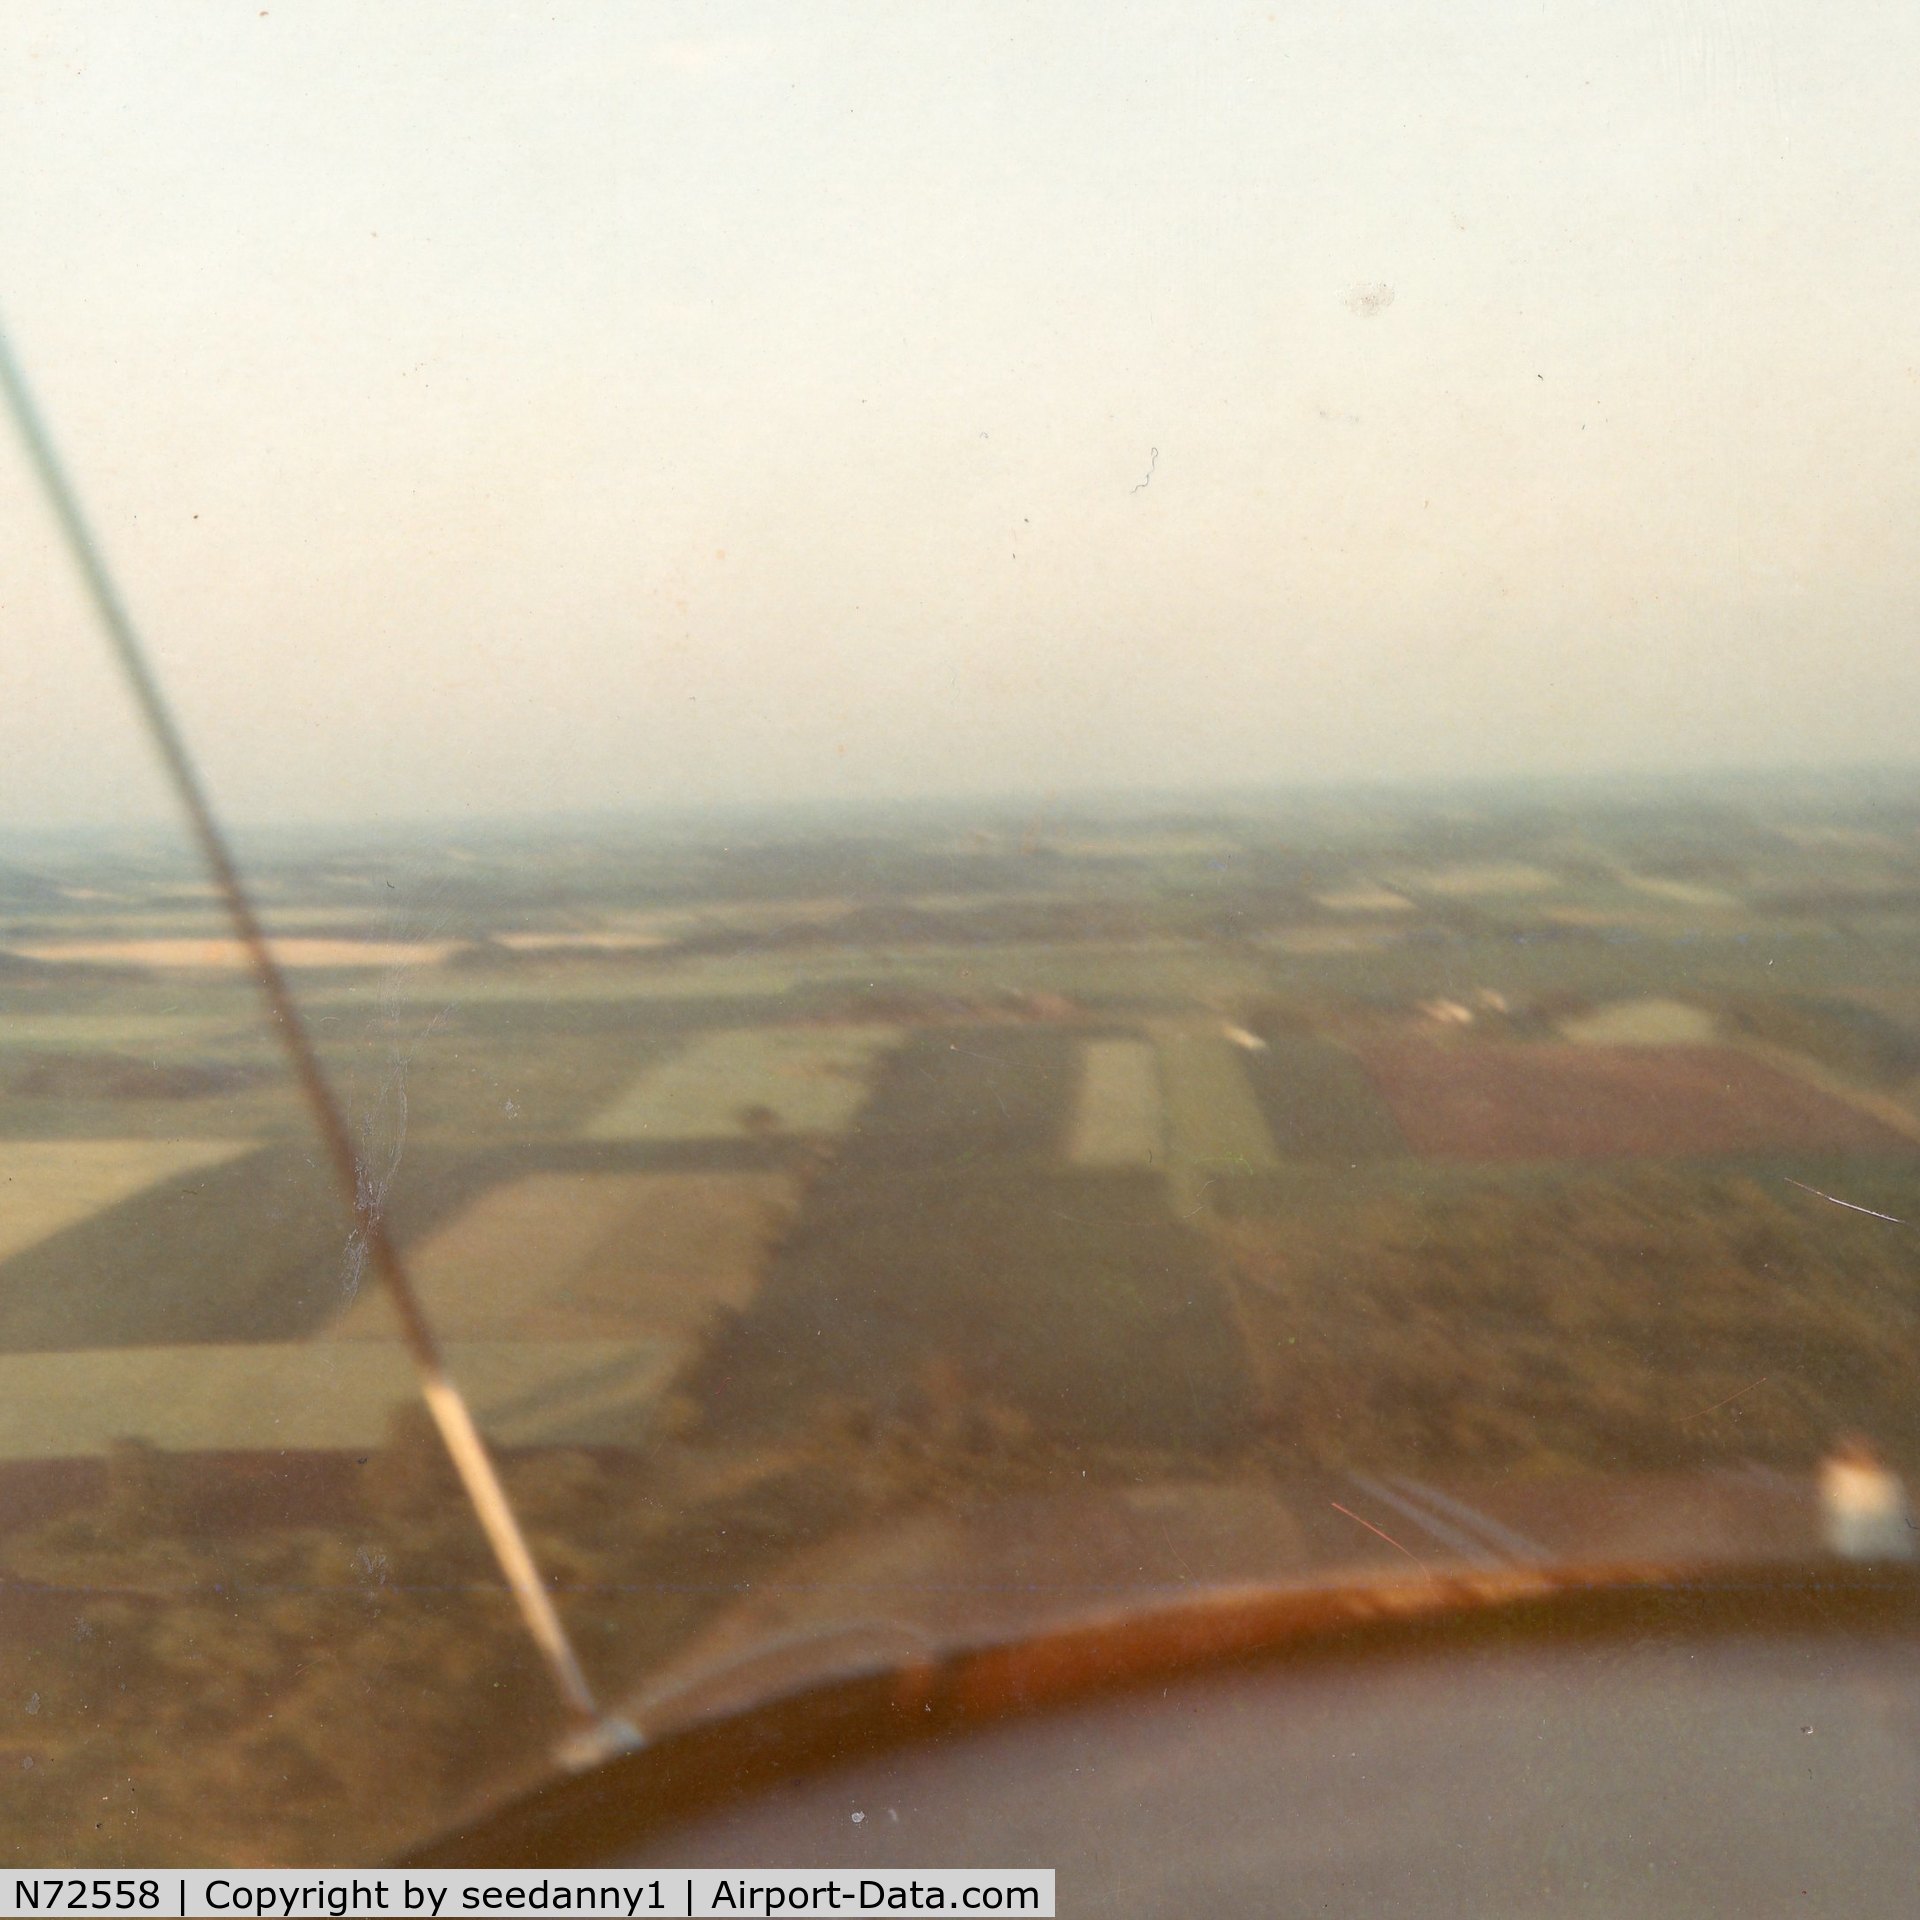 N72558, 1946 Cessna 140 C/N 9728, Dads landing strip 12:00. Family farm in Eden Valley, MN